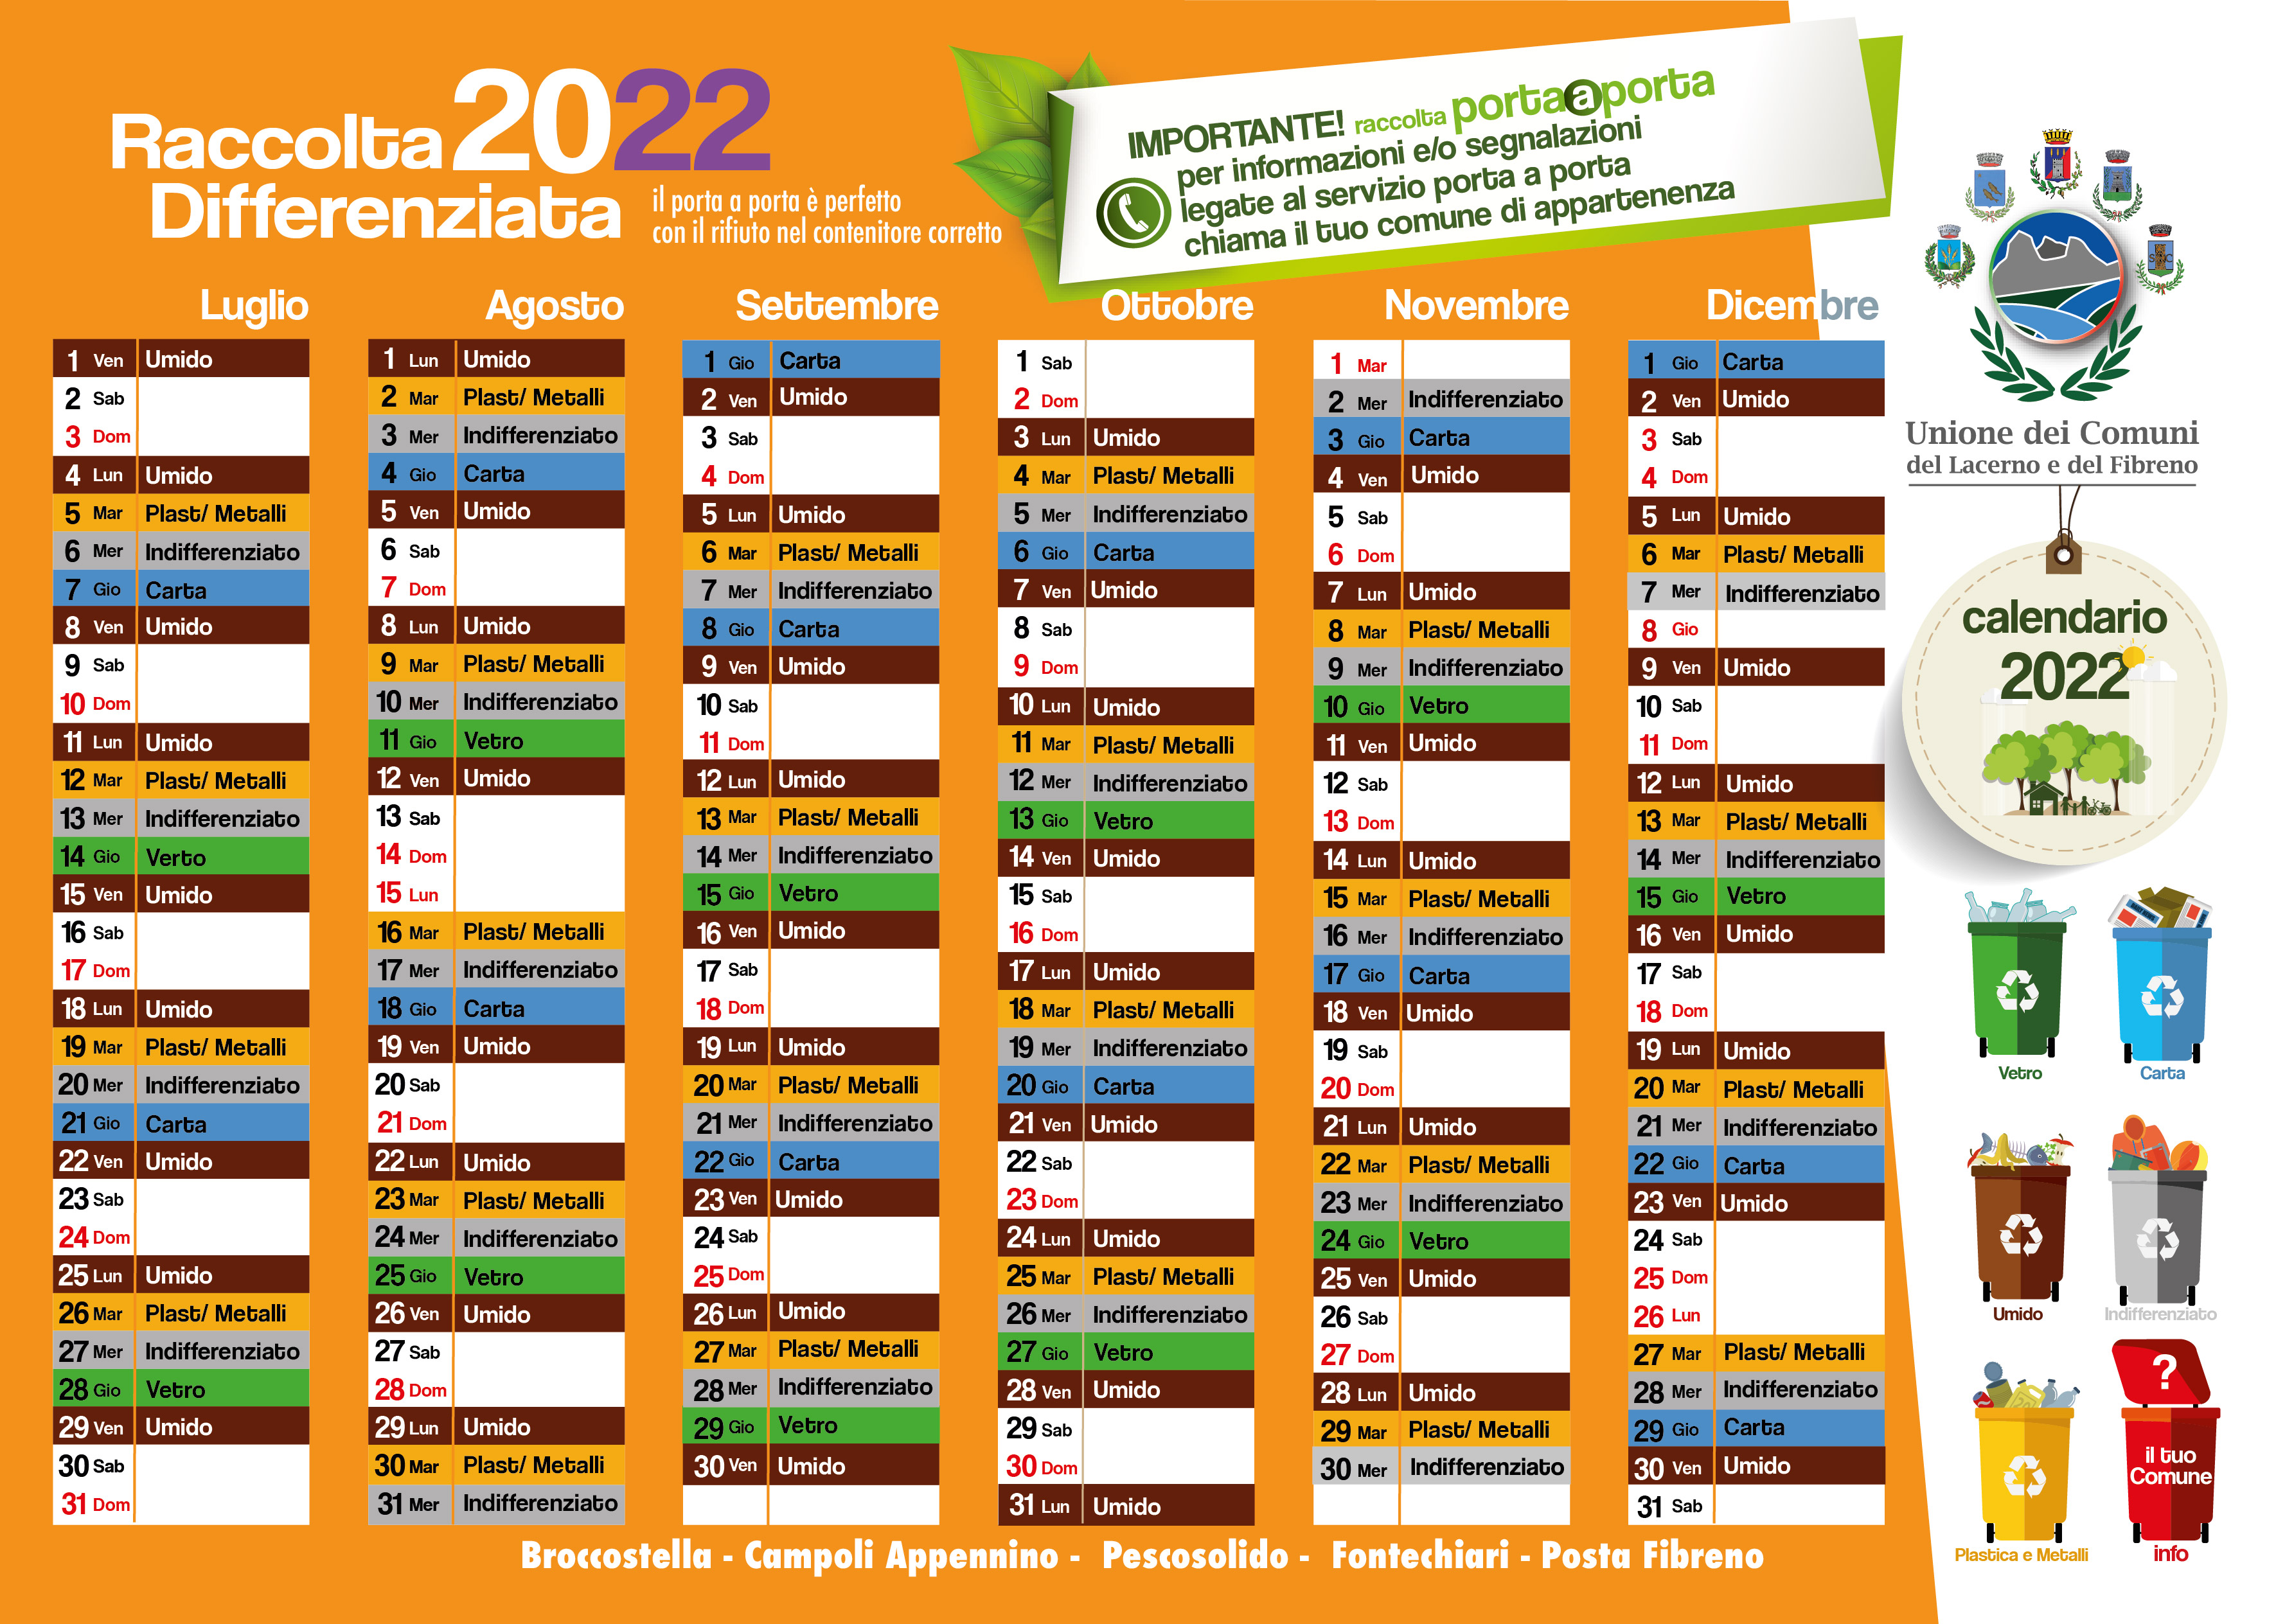 Calendario raccolta differenziata 2022